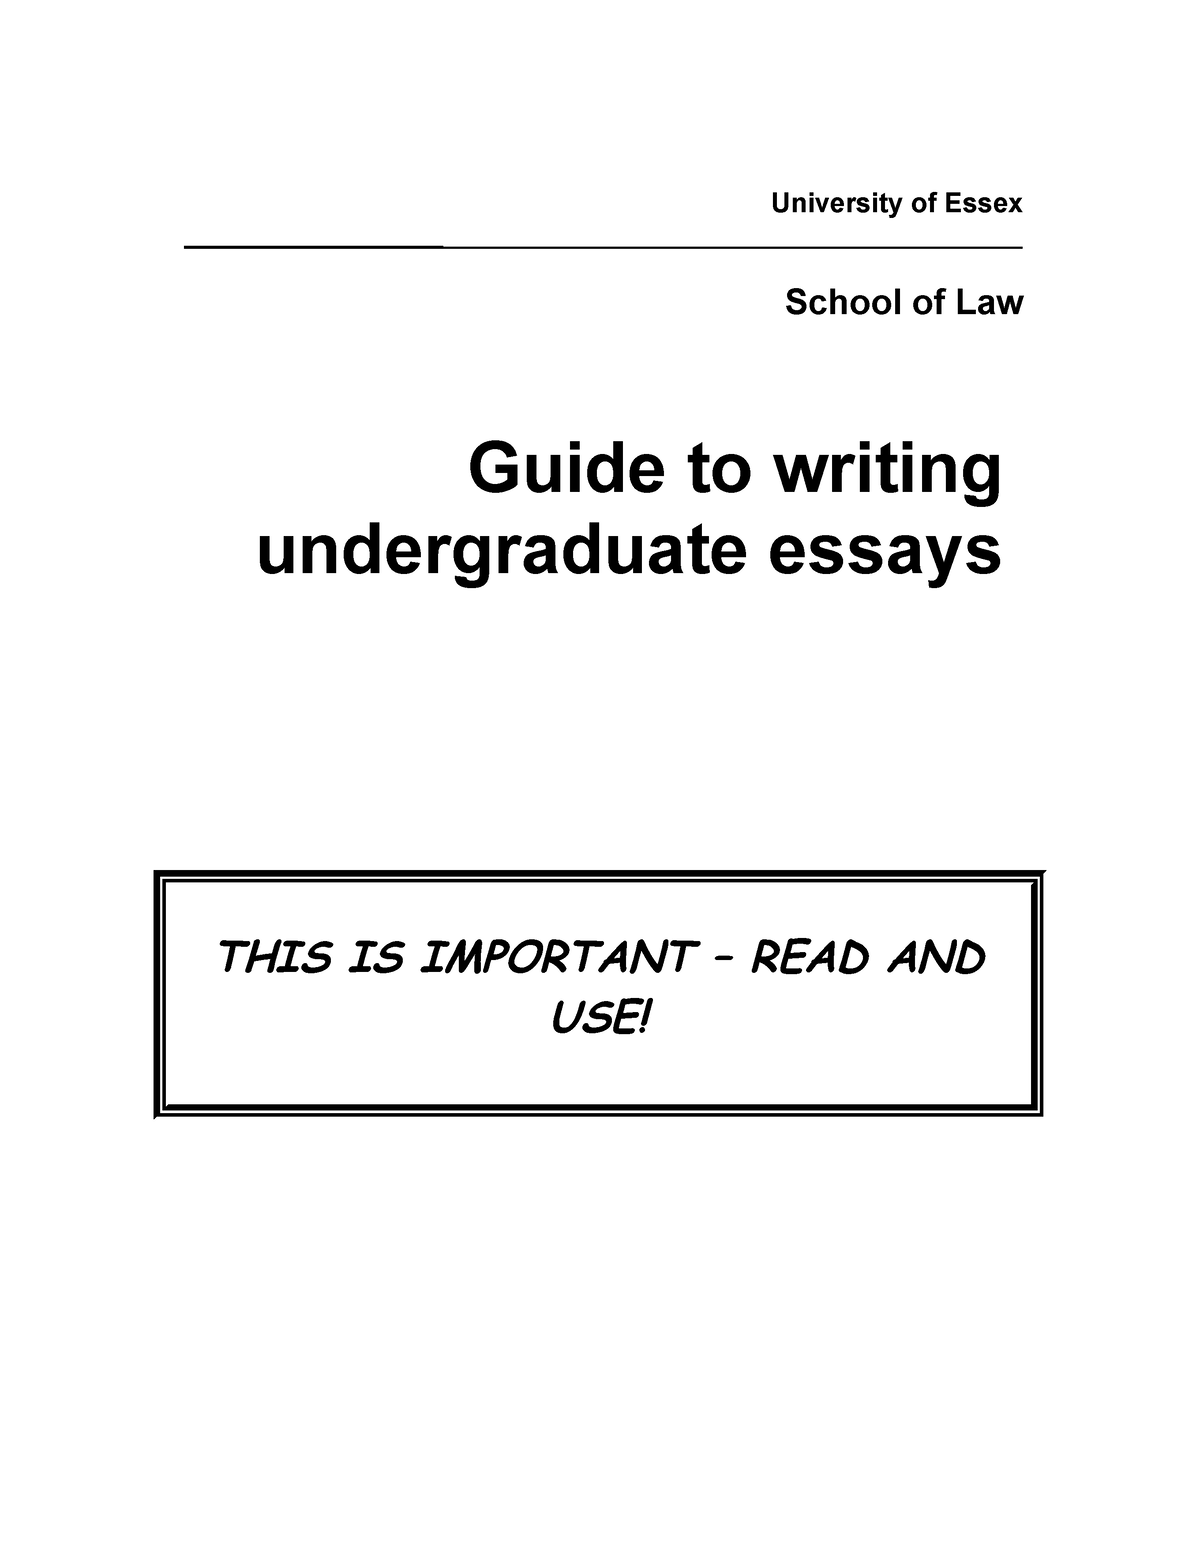 university of essex essay writing